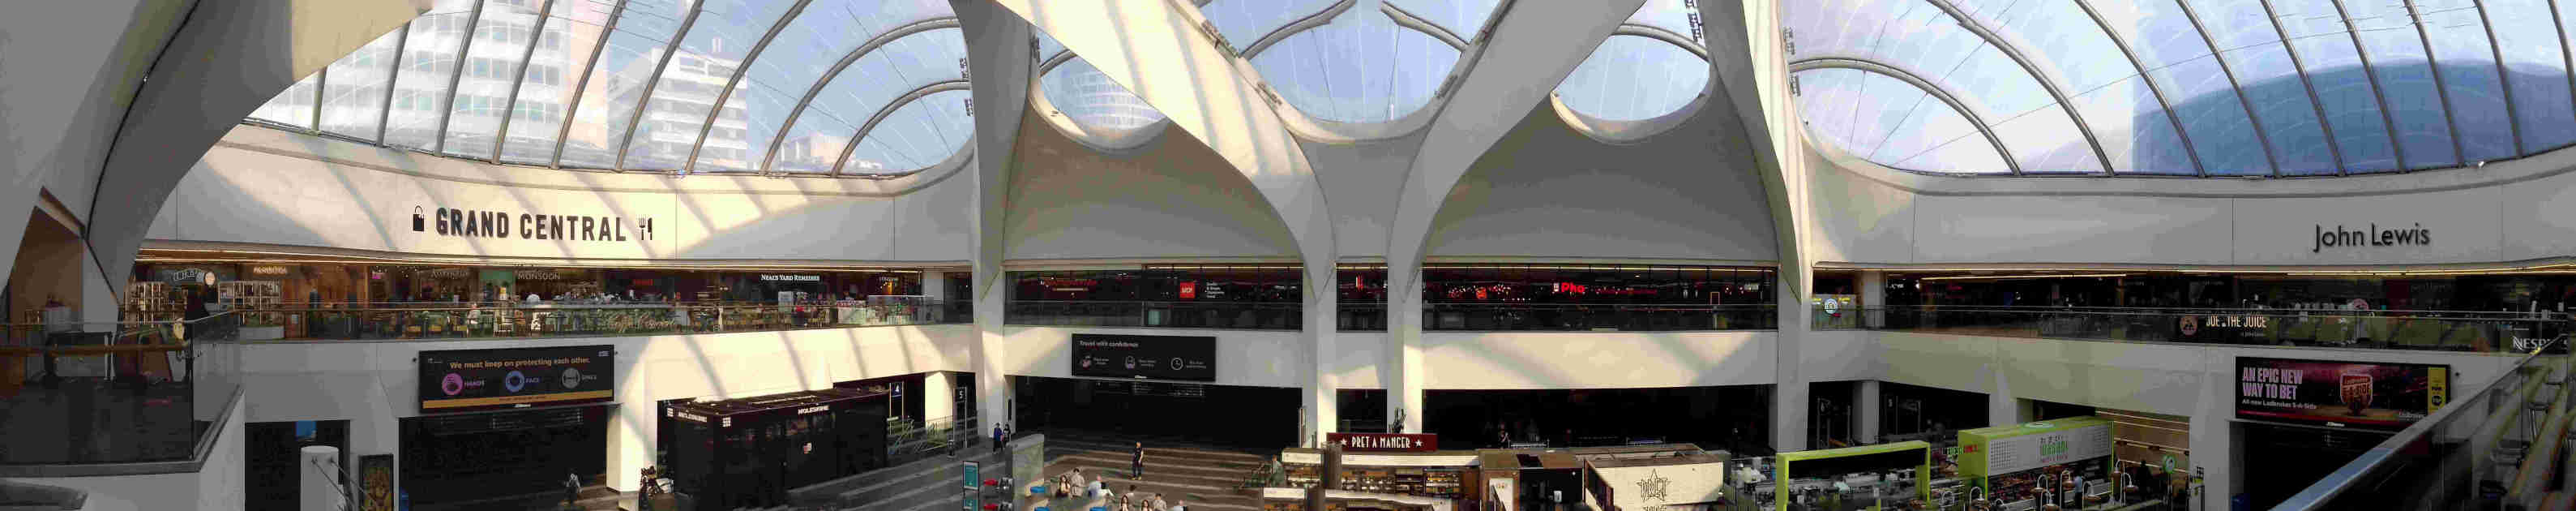 ImagesBirmingham/Birmingham Centre Grand Central - New Street Station Panorama.jpg